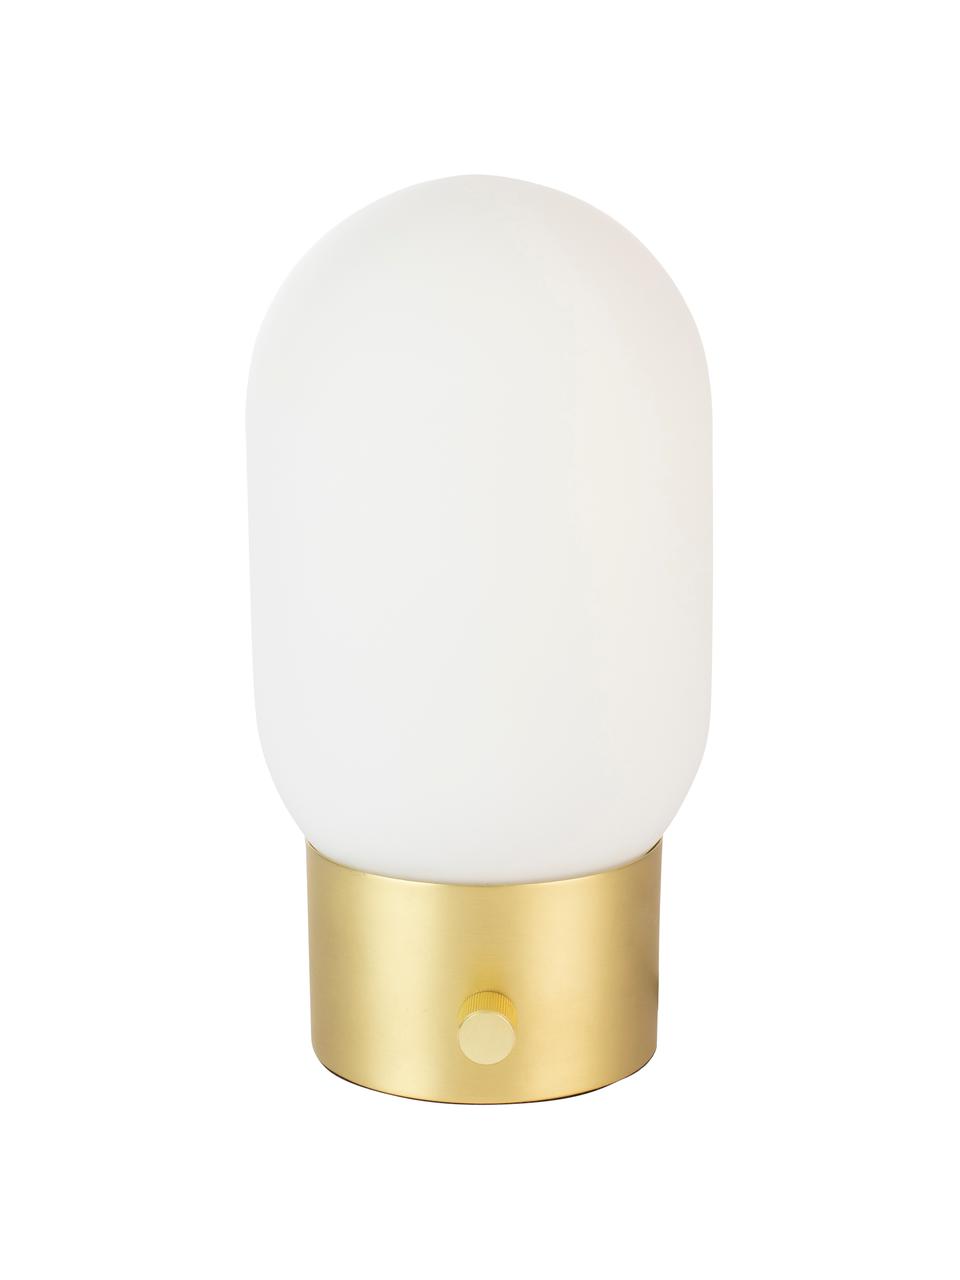 Kleine Dimmbare Nachttischlampe Urban mit USB-Anschluss, Lampenschirm: Opalglas, Goldfarben, Opalweiss, Ø 13 x H 25 cm